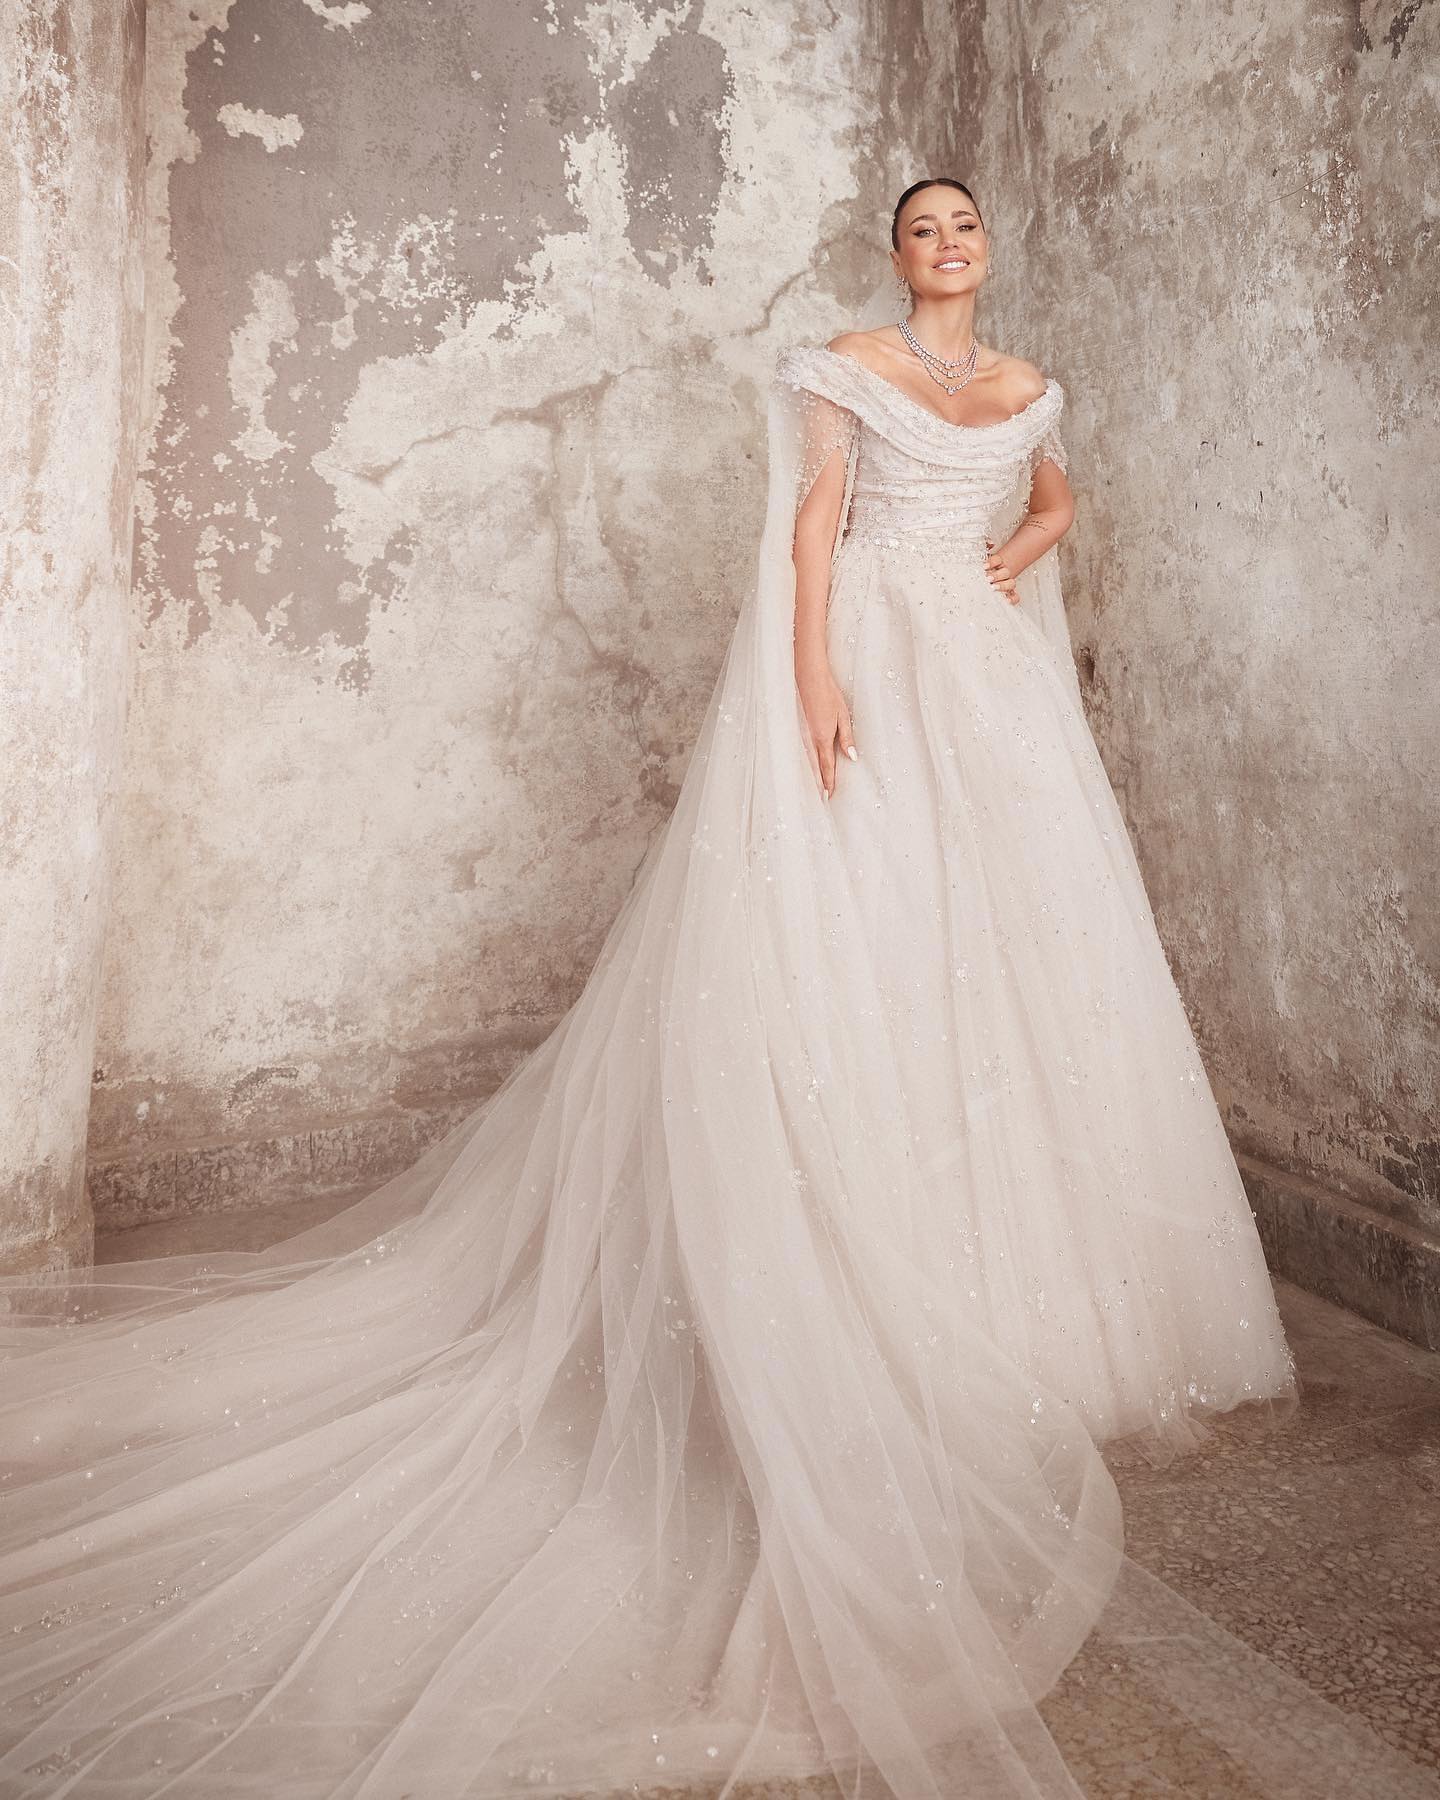 Ghina-Ghandour-wedding-dress-designer